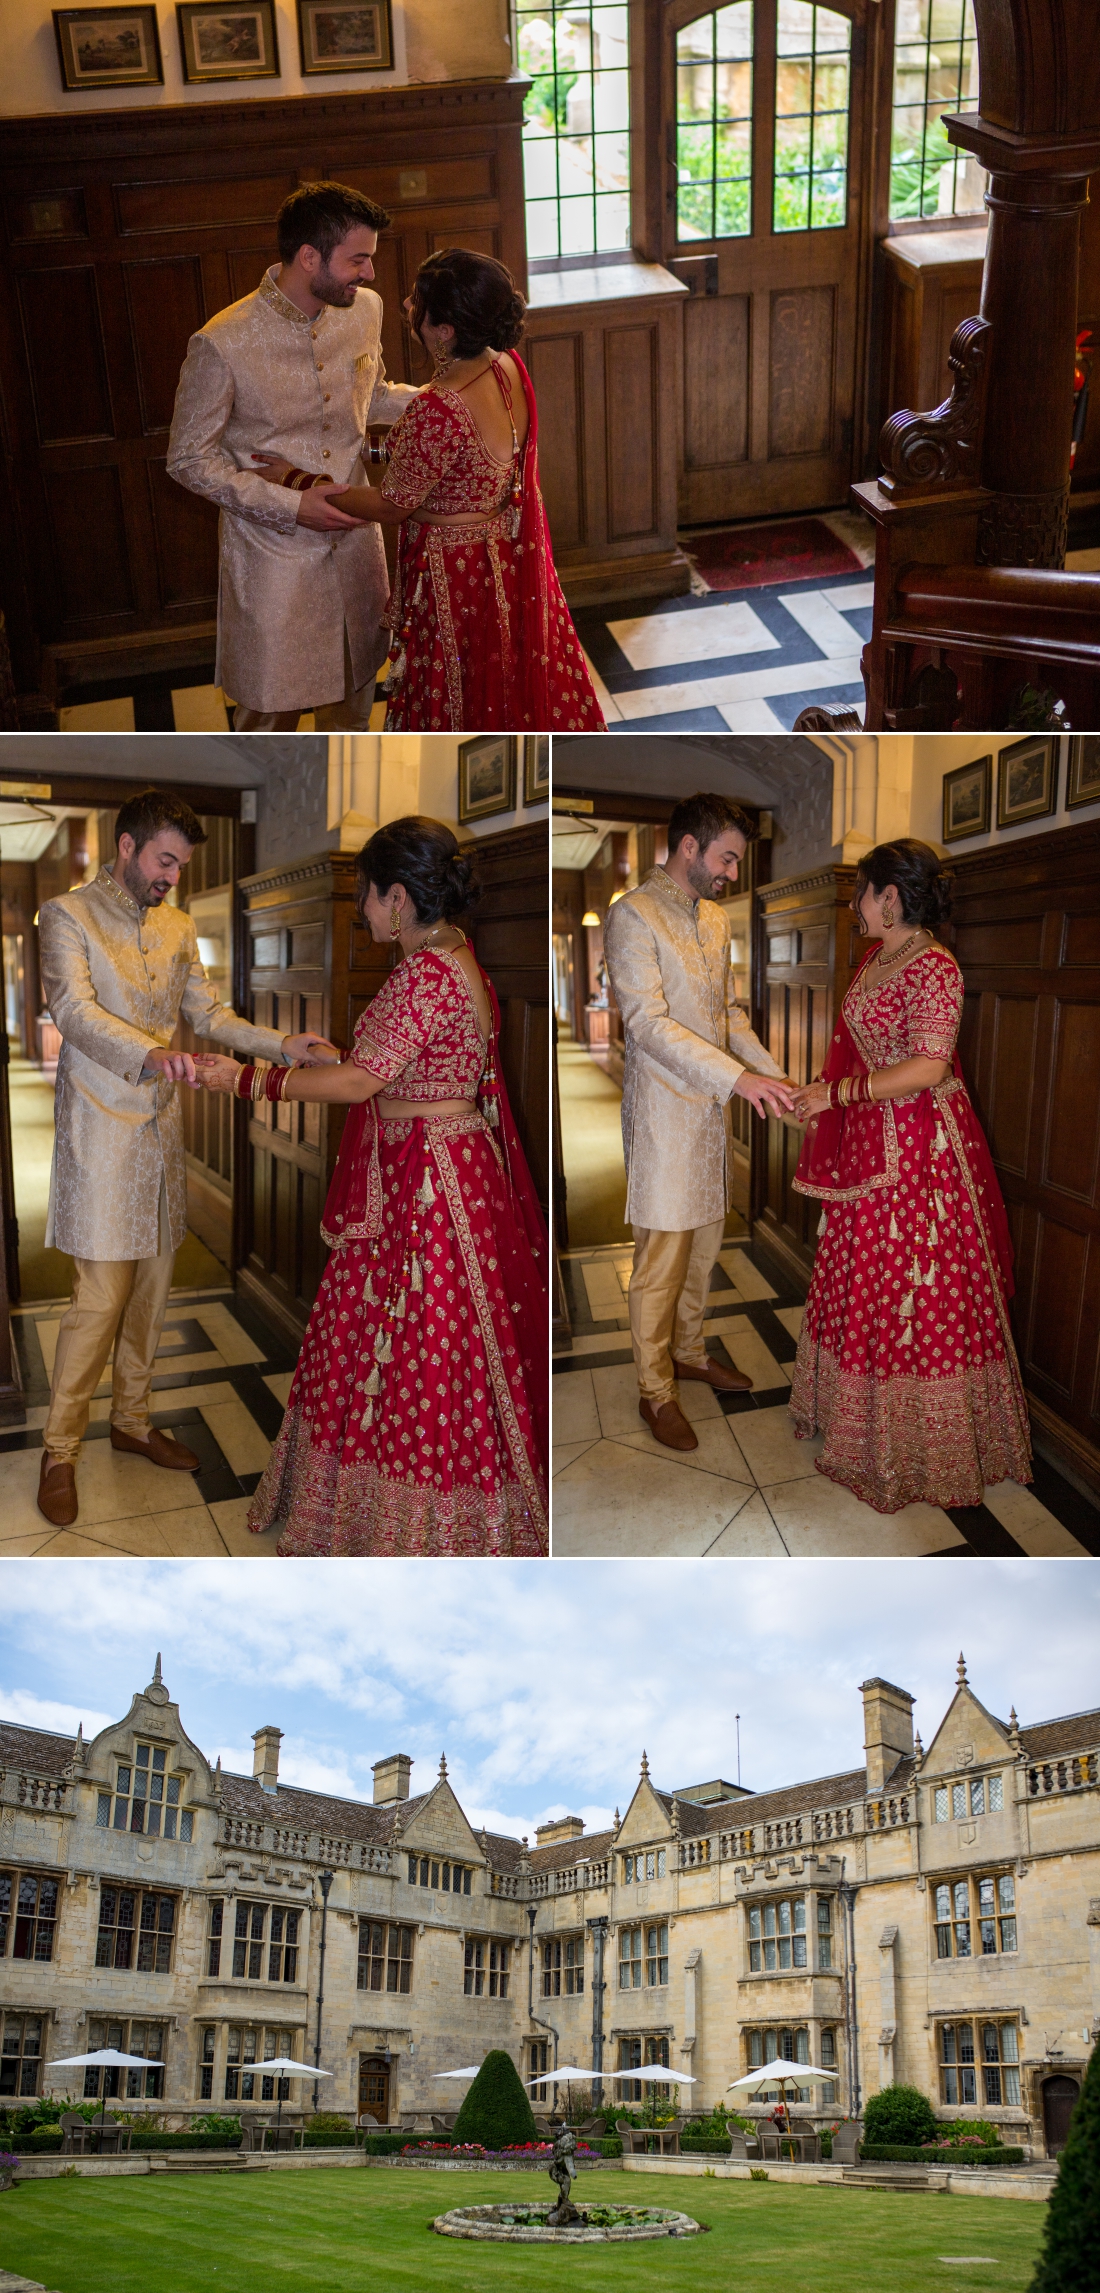 Rushton Hall Asian Wedding Reception Venue 4